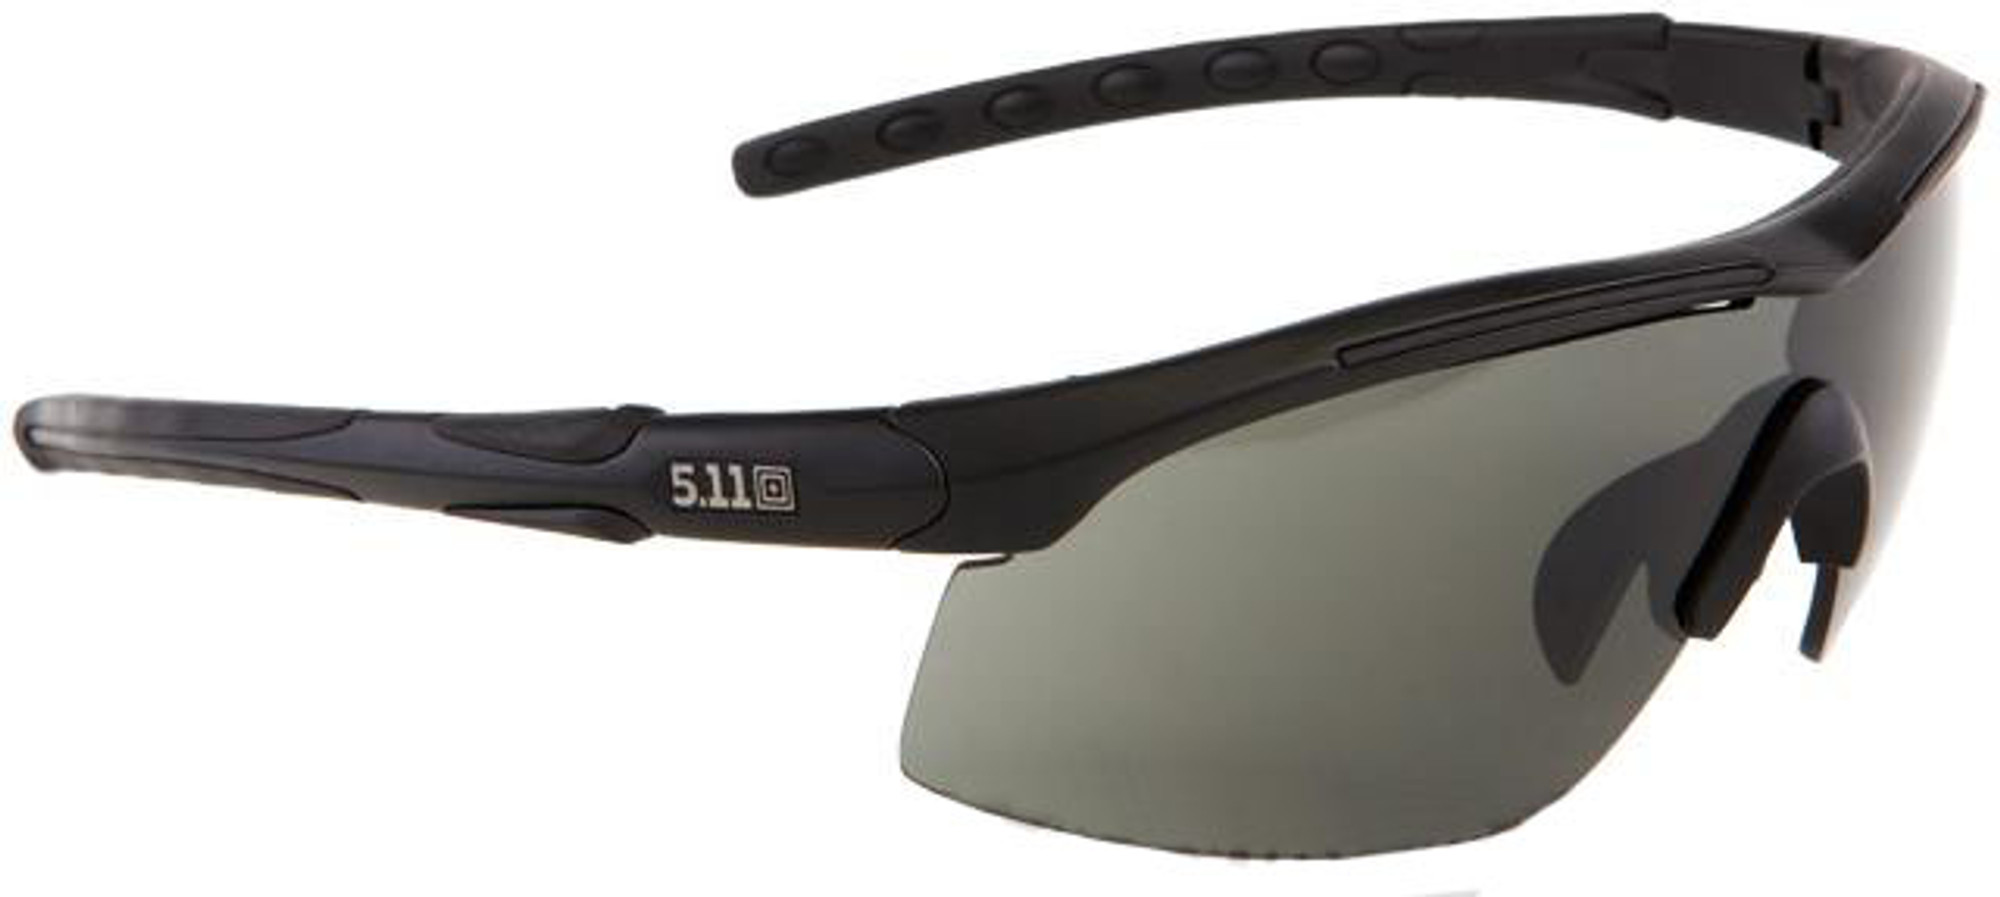 5.11 Tactical RAID Eyewear Tactical Sunglasses by WileyX